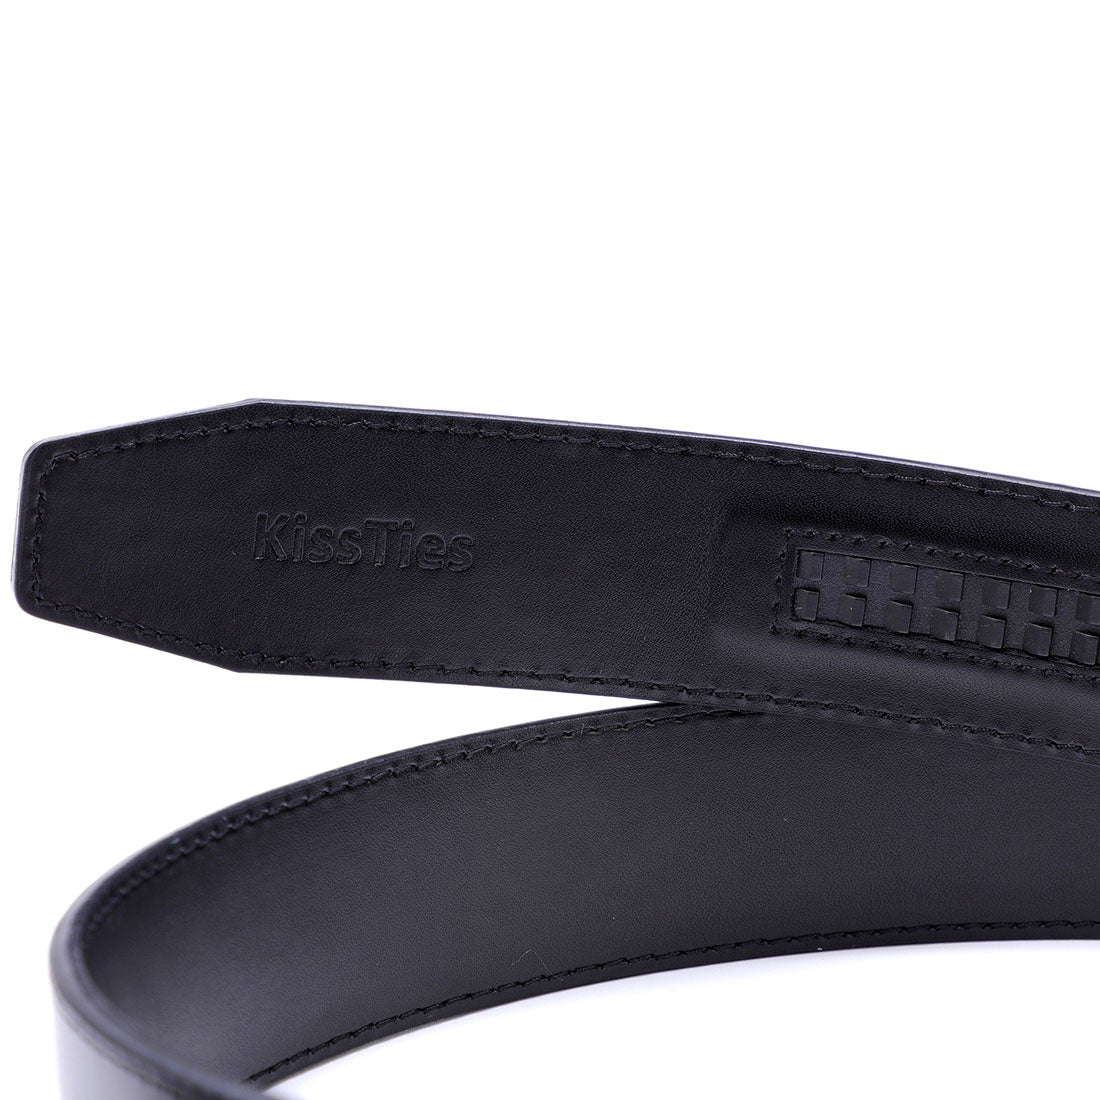 Genuine Solid Leather Micro-Ratchet Belt | Steel Black Buckle | Black Strap - Tie, bowtie, pocket square  | Kissties